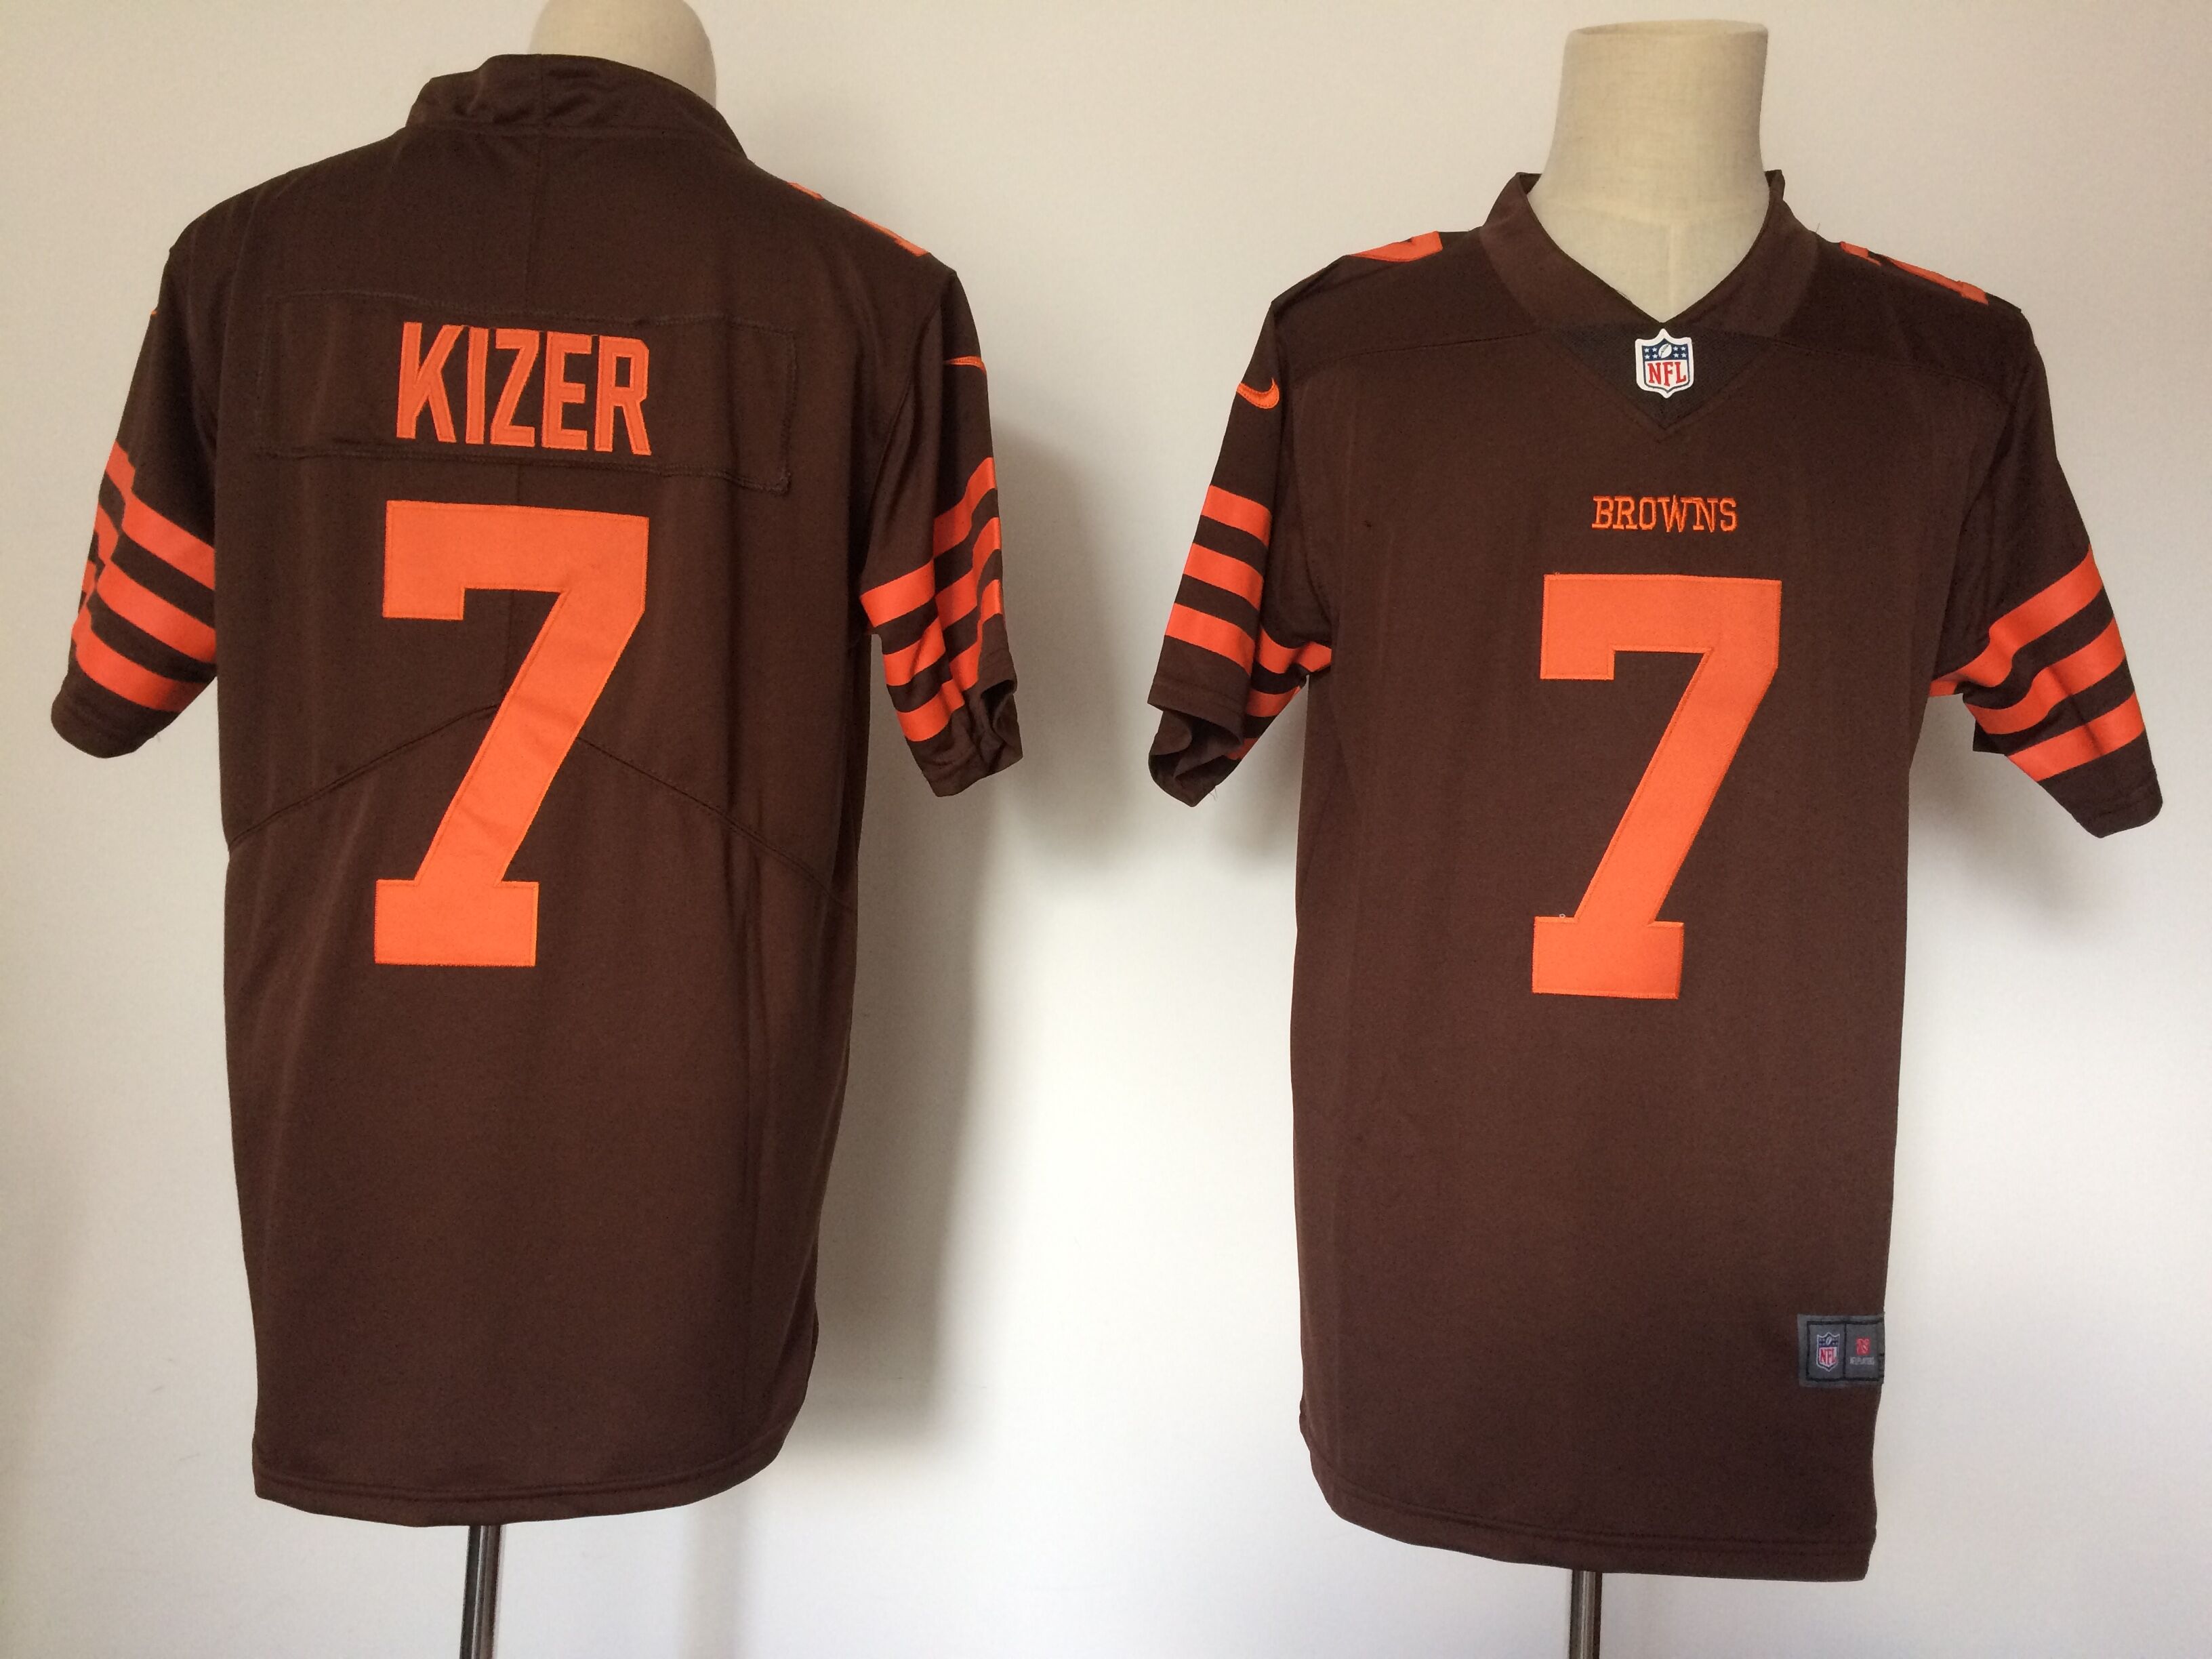 NFL Cleveland Browns #7 Kizer Brown Vapor Limted Jersey